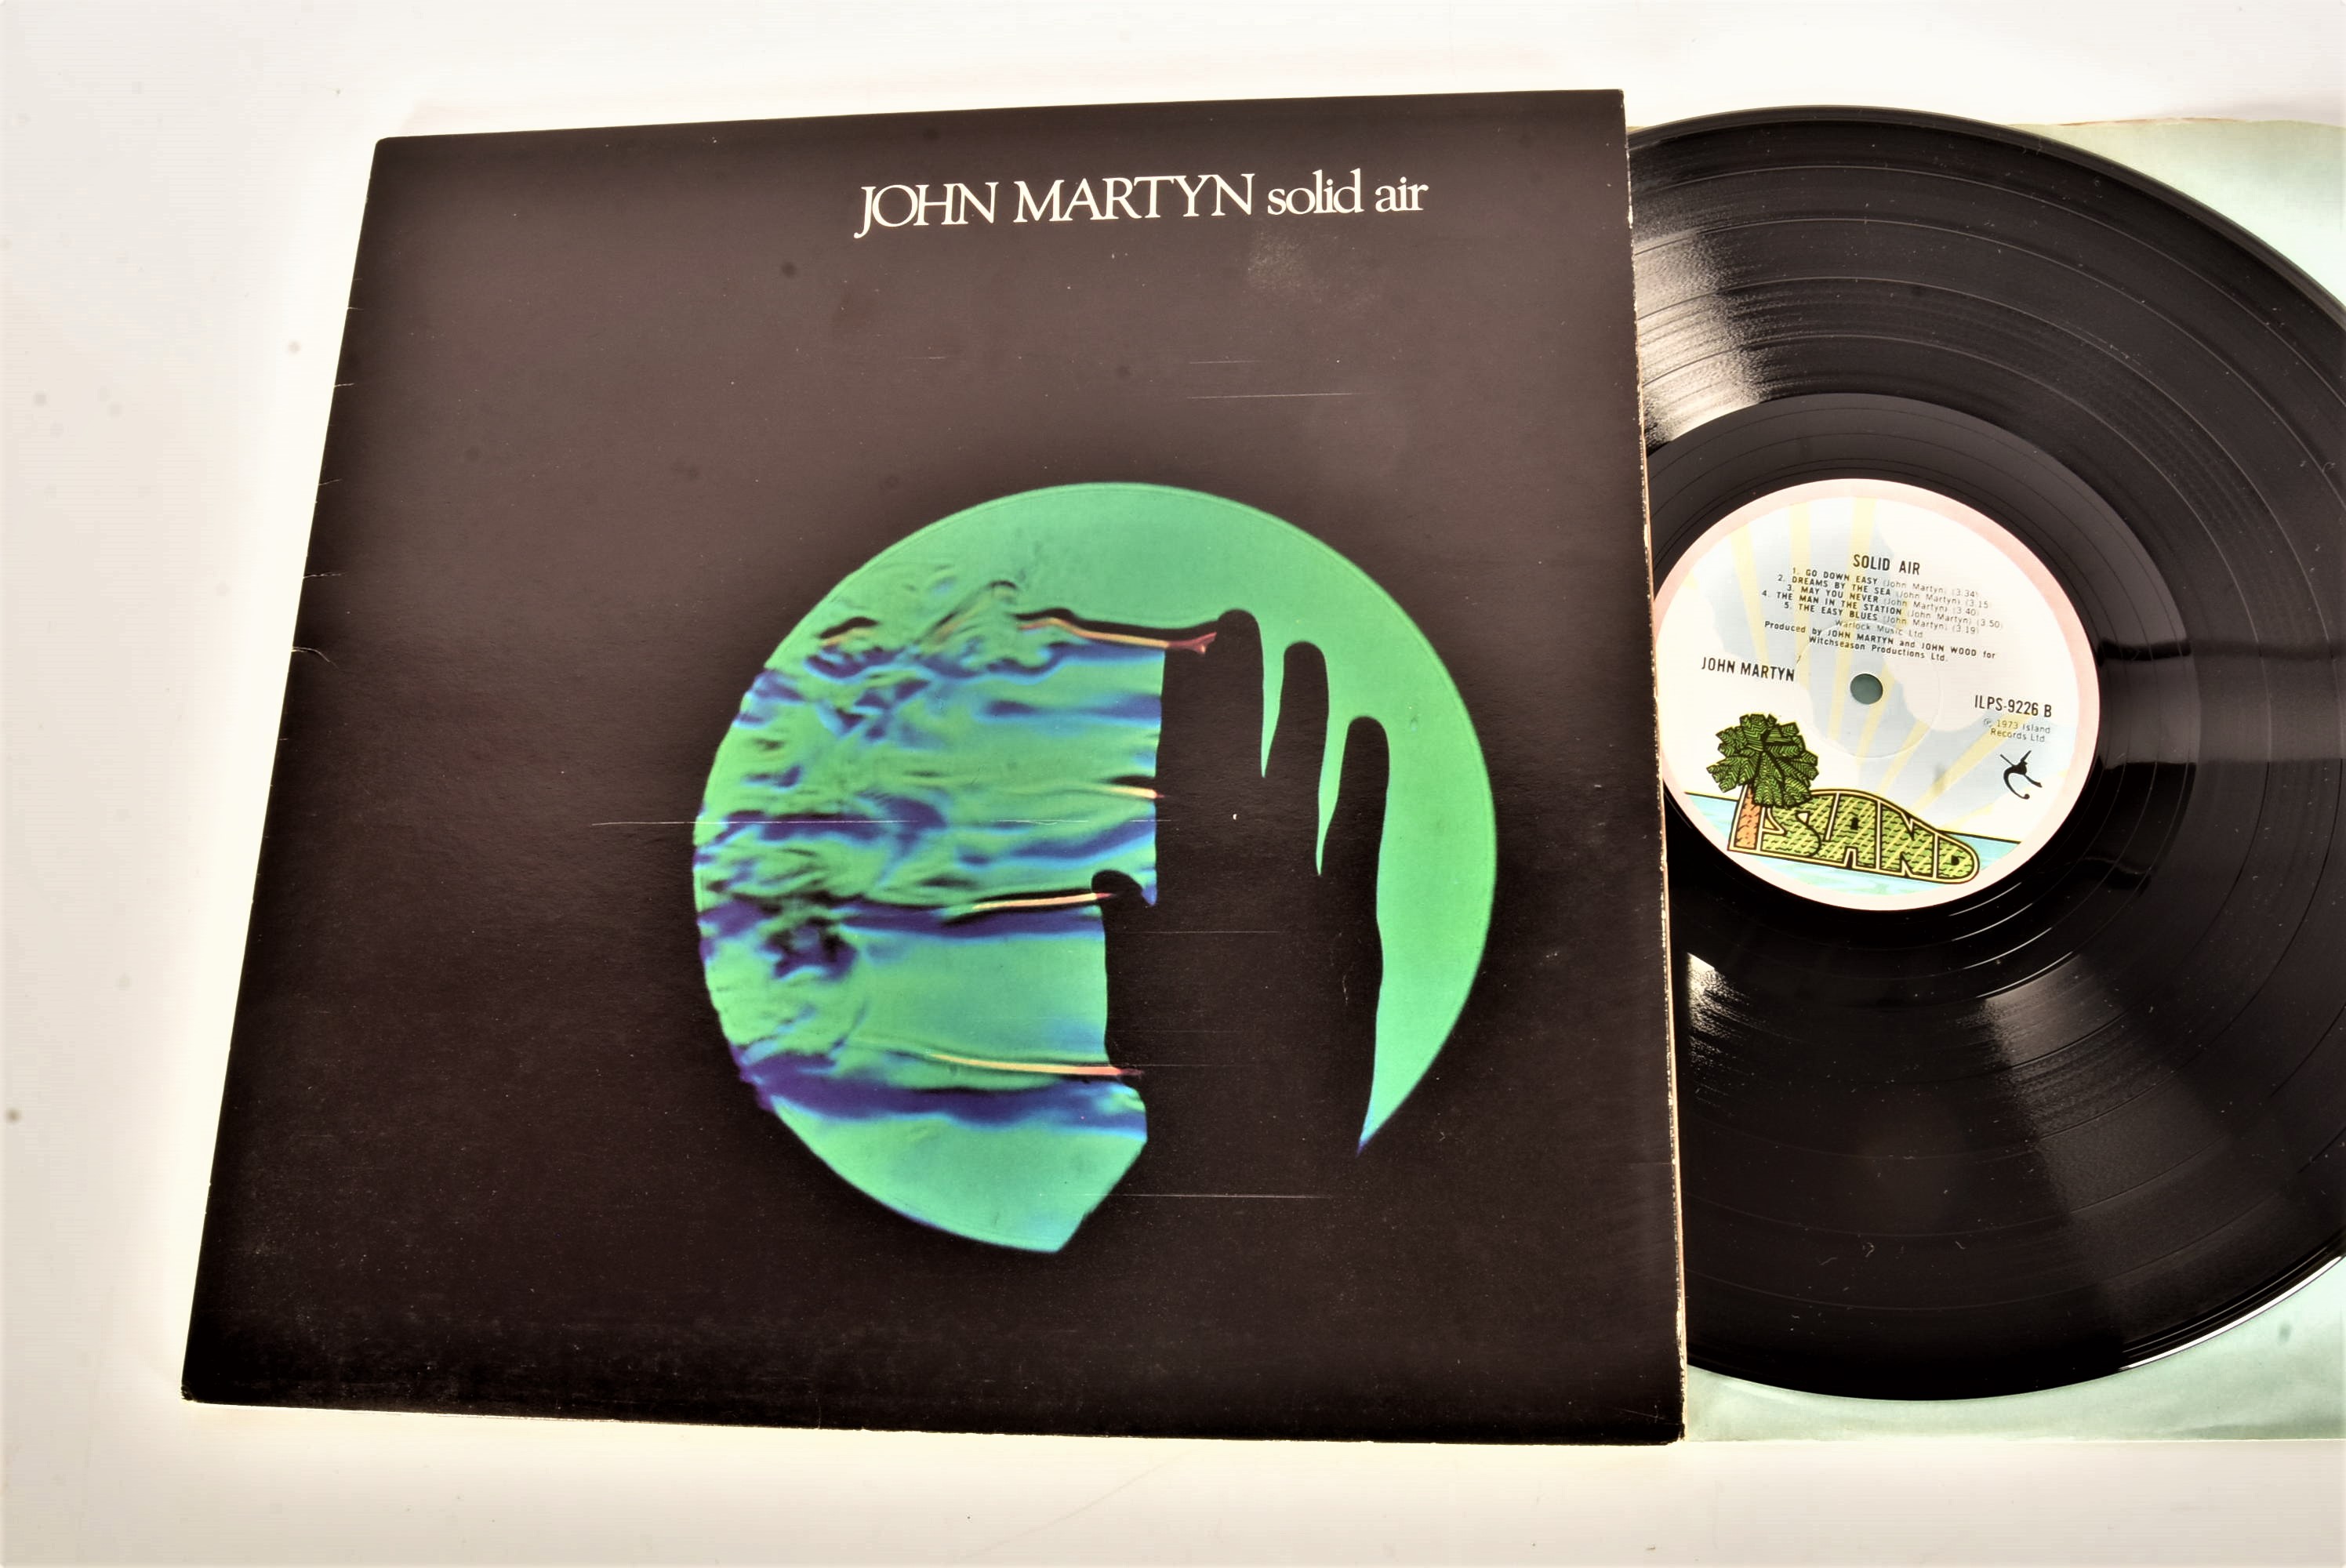 John Martyn LP, Solid Air LP - Original UK Release 1973 on Island (ILPS 9226) - Gatefold MacNeill